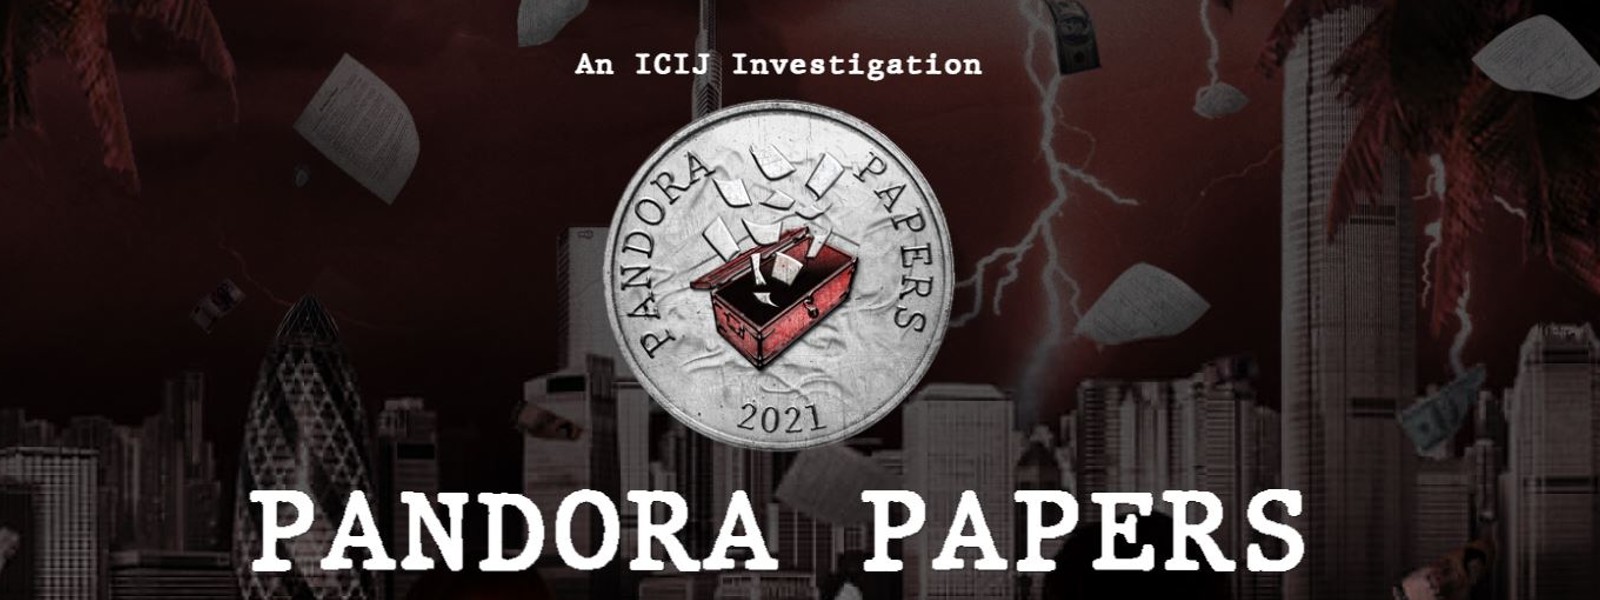 TISL wants investigations into Pandora Papers leak